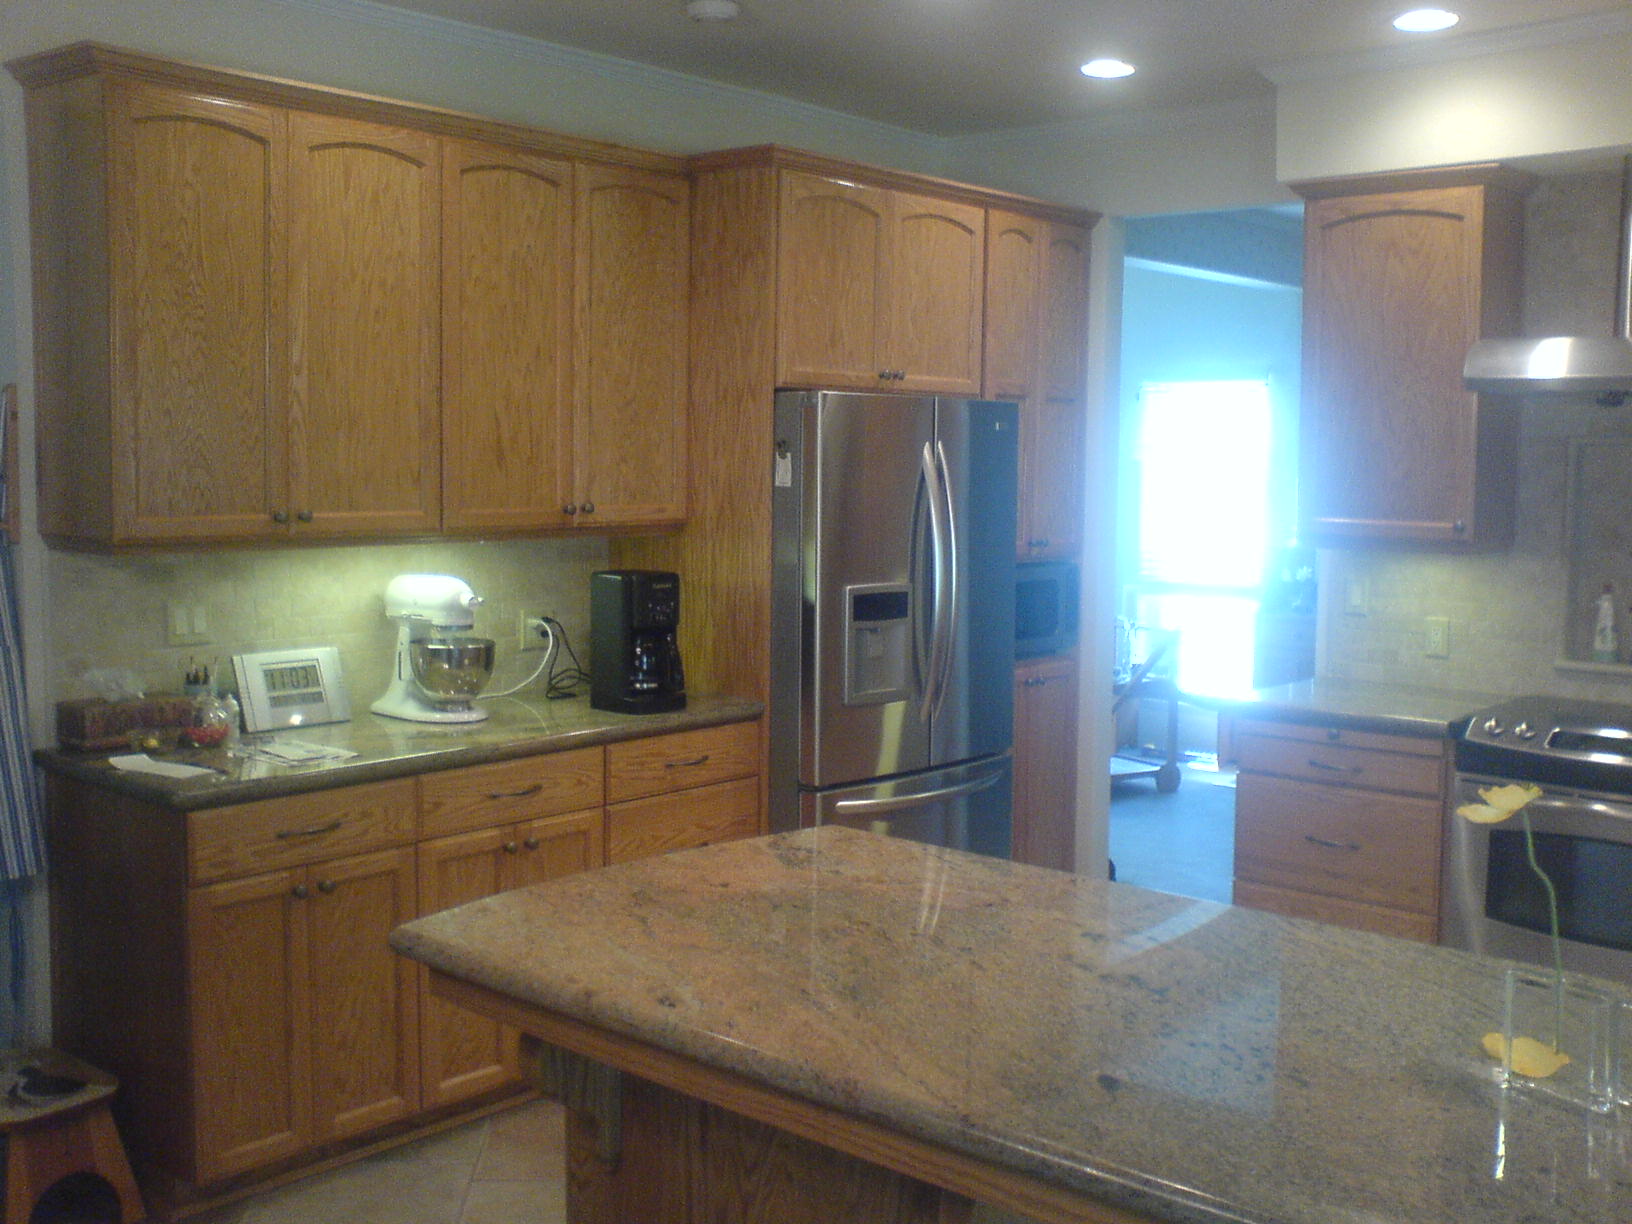 Oak insert panel kitchen cabinets